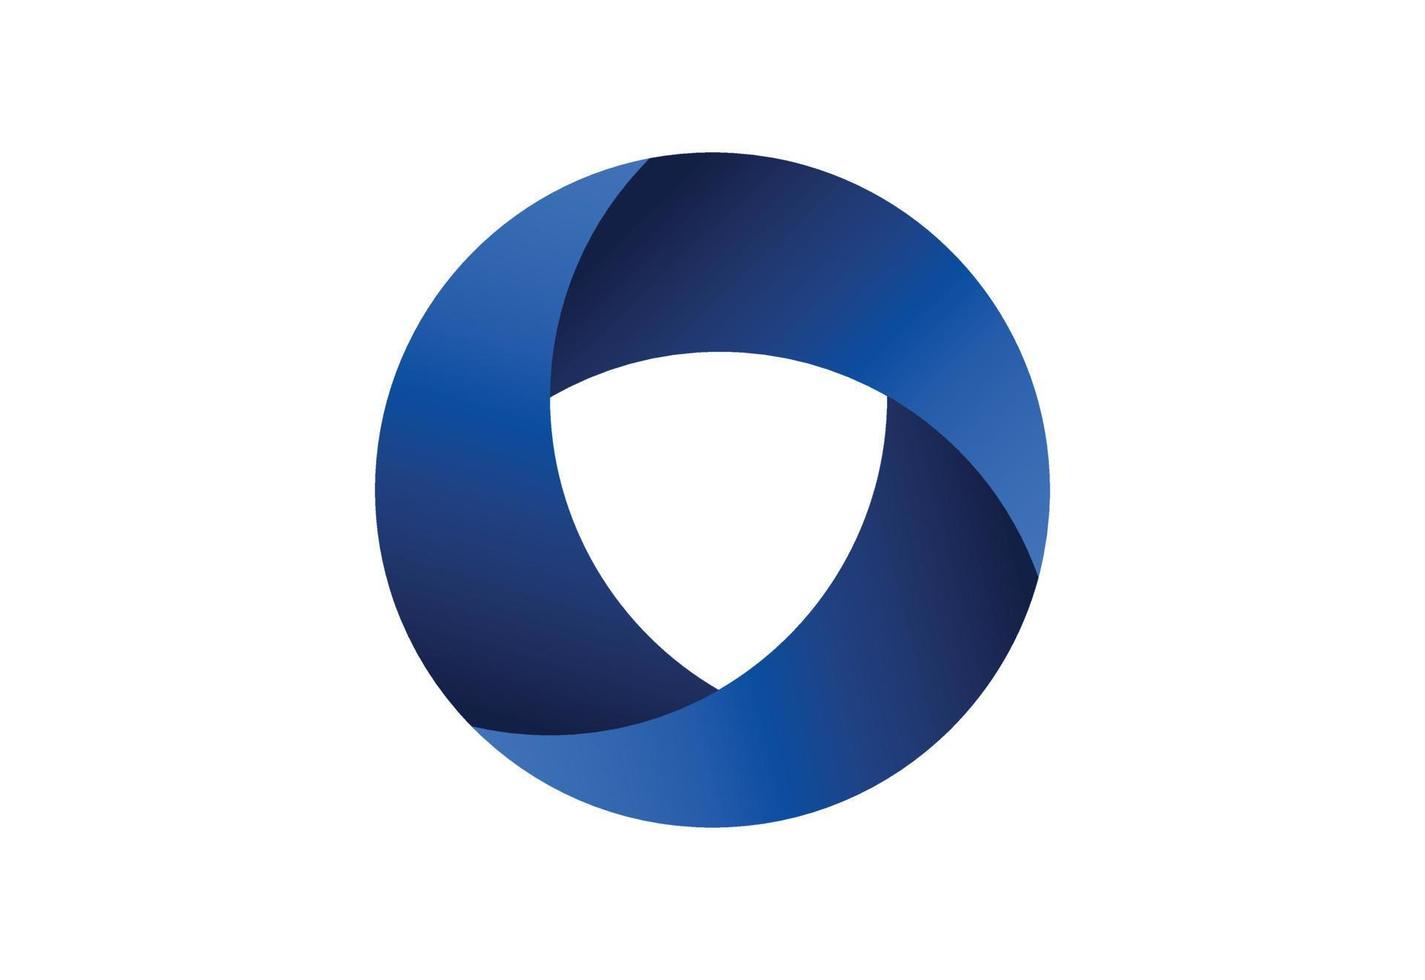 círculo forma logotipo projeto, vetor ilustração